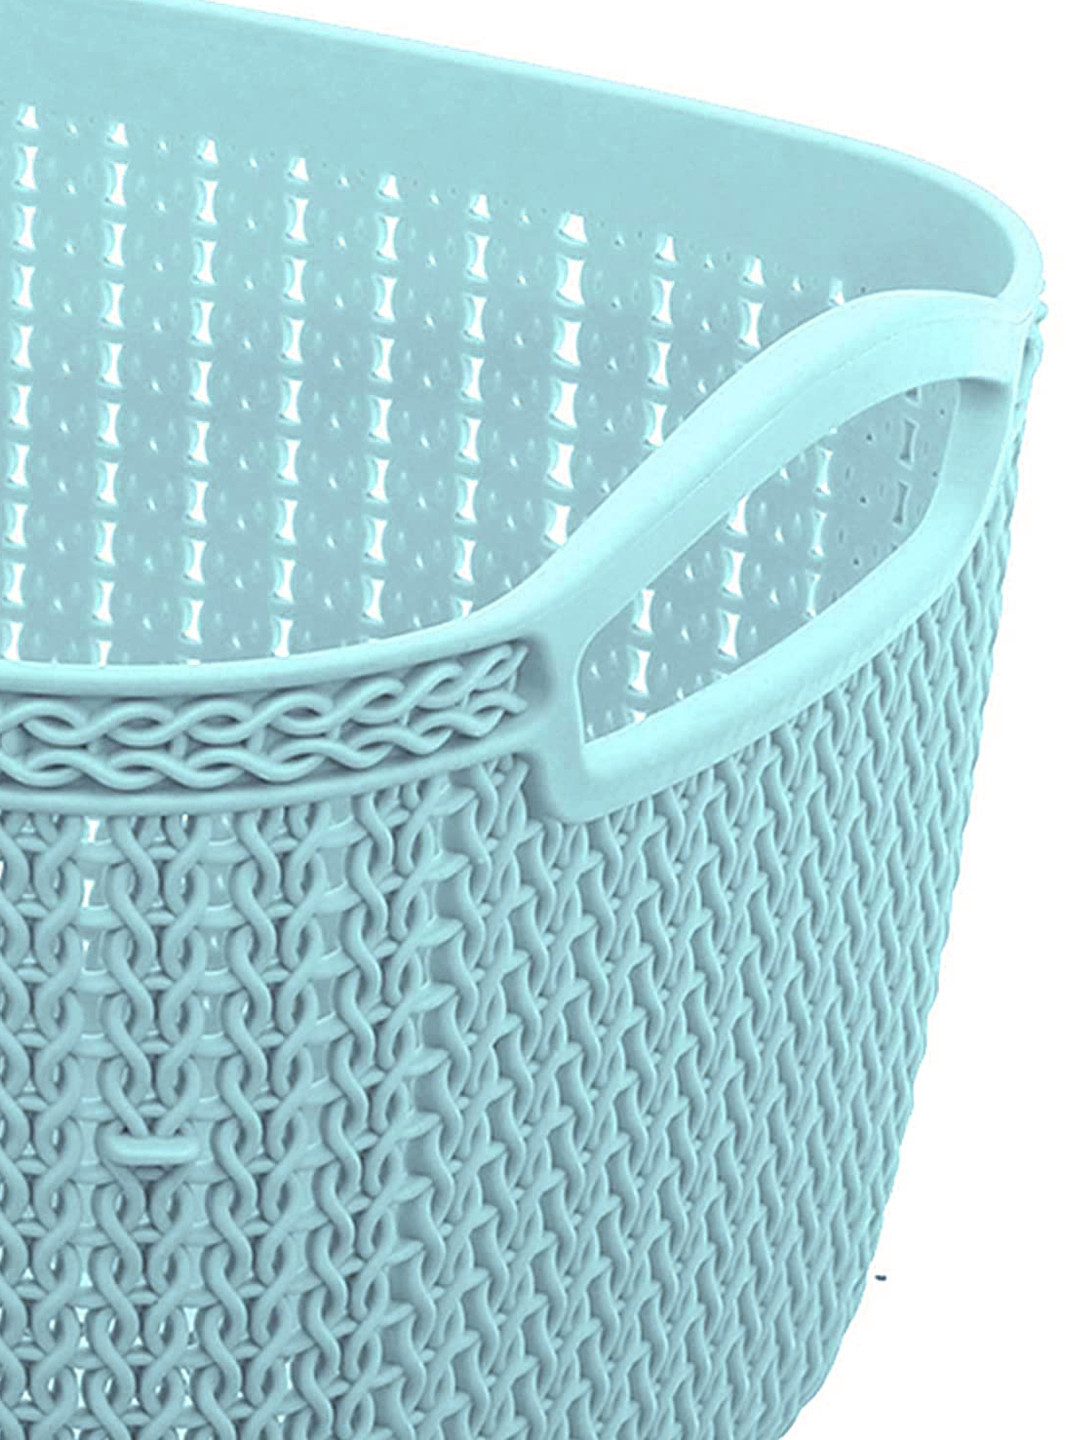 Kuber Industries Q-6 Unbreakable Plastic Multipurpose Large Size Flexible Storage Baskets/Fruit Vegetable Bathroom Stationary Home Basket with Handles (Light Blue)